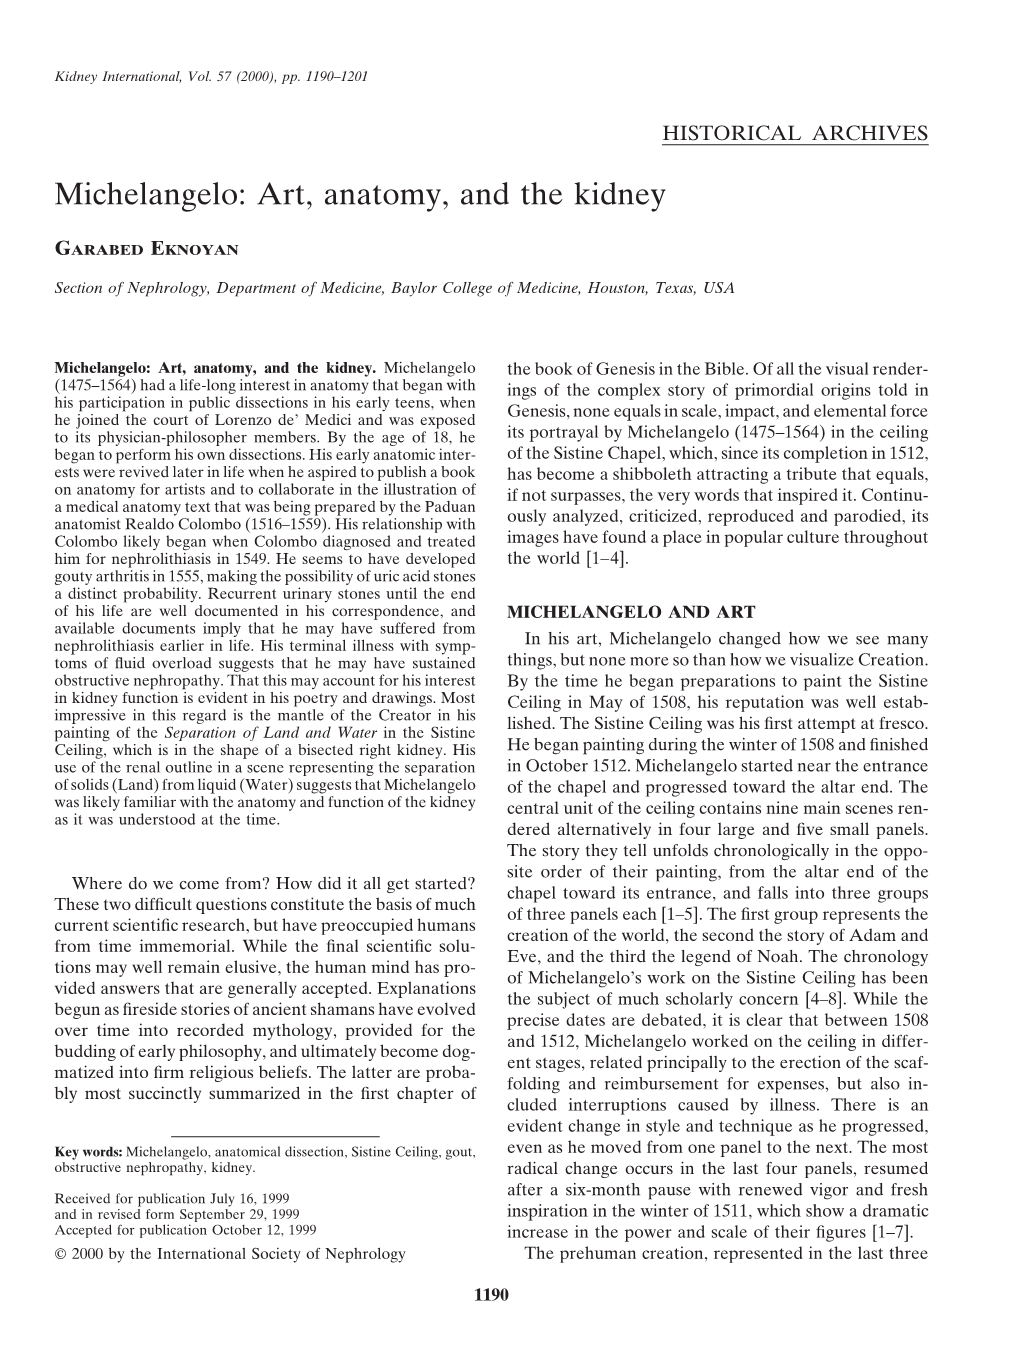 Michelangelo: Art, Anatomy, and the Kidney